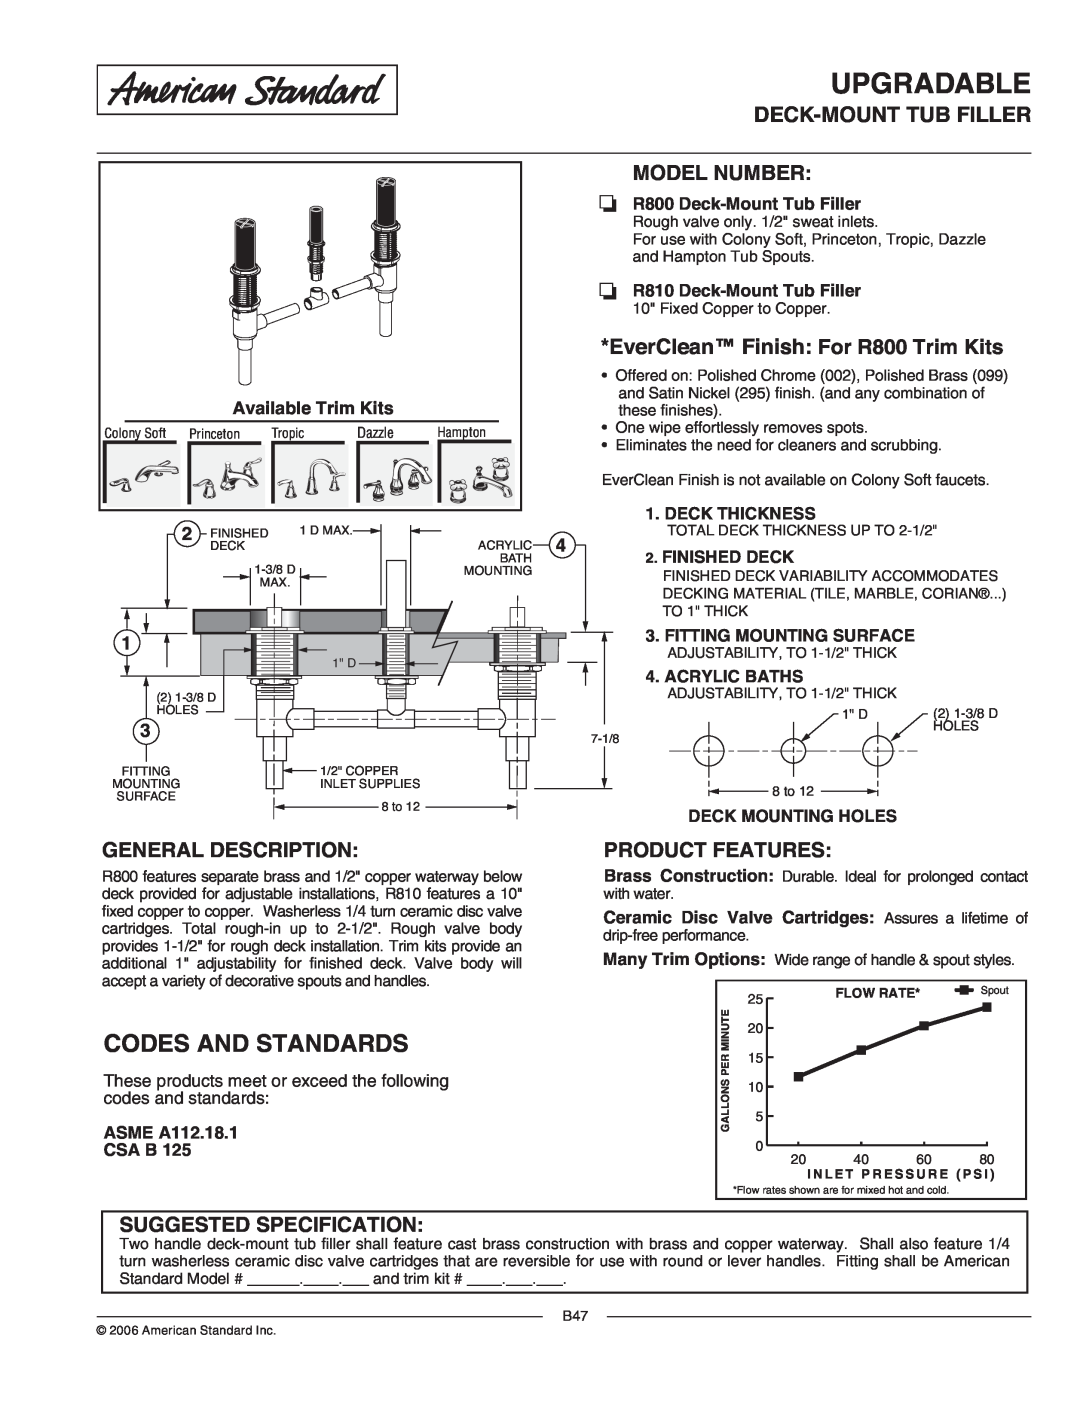 American Standard R800 dimensions Upgradable, Deck-Mount Tub Filler, Model Number, General Description, Product Features 